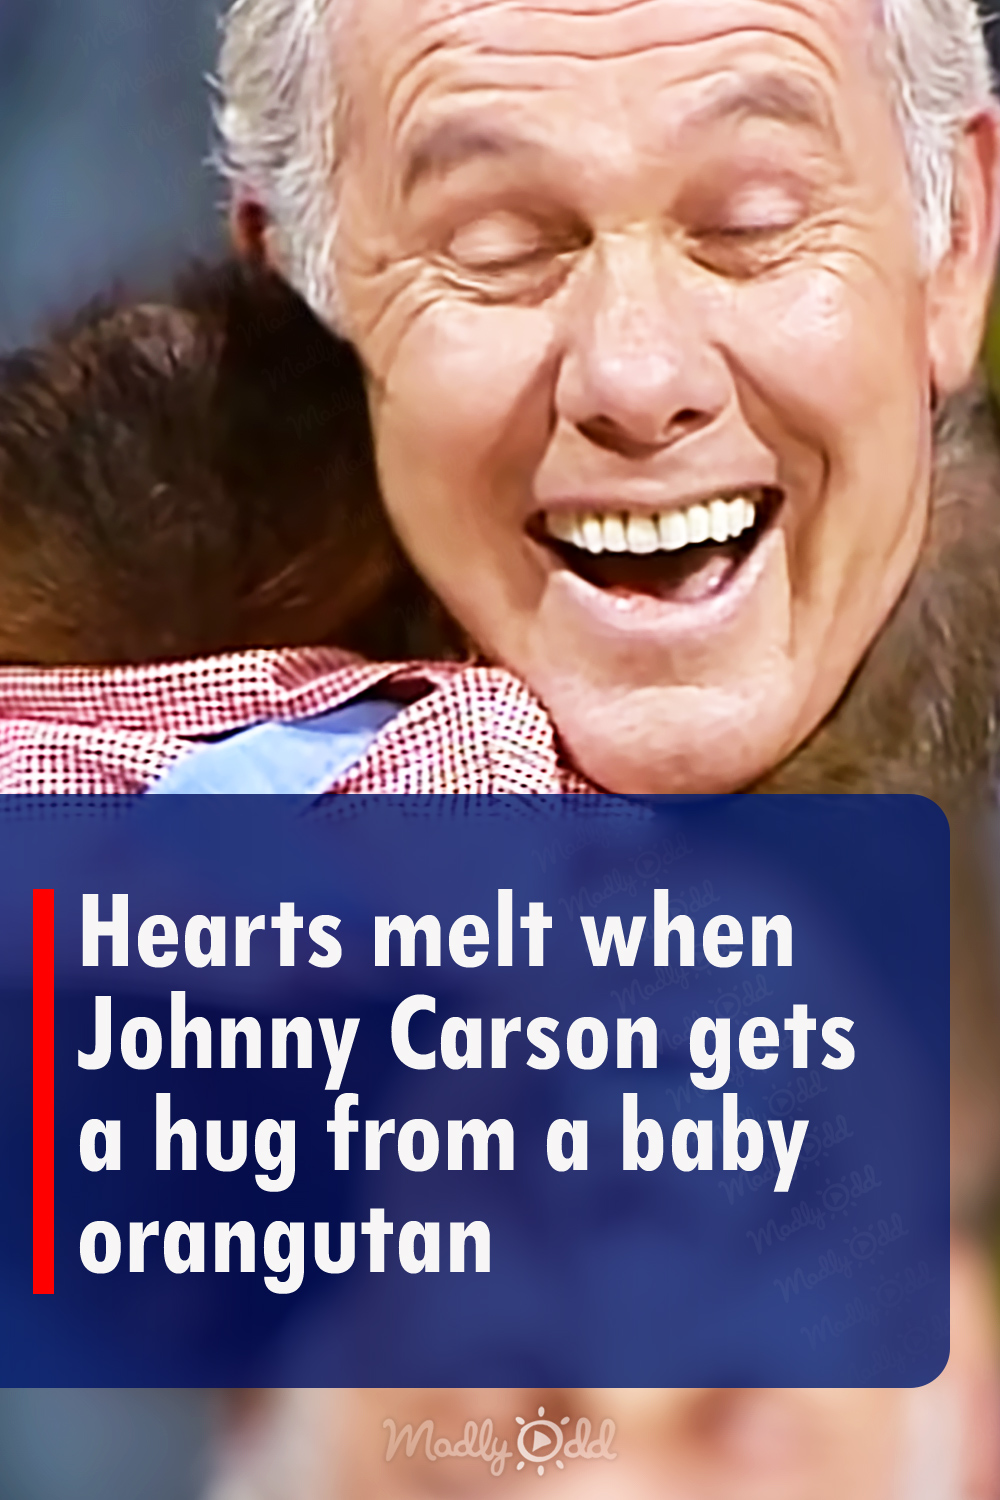 Hearts melt when Johnny Carson gets a hug from a baby orangutan